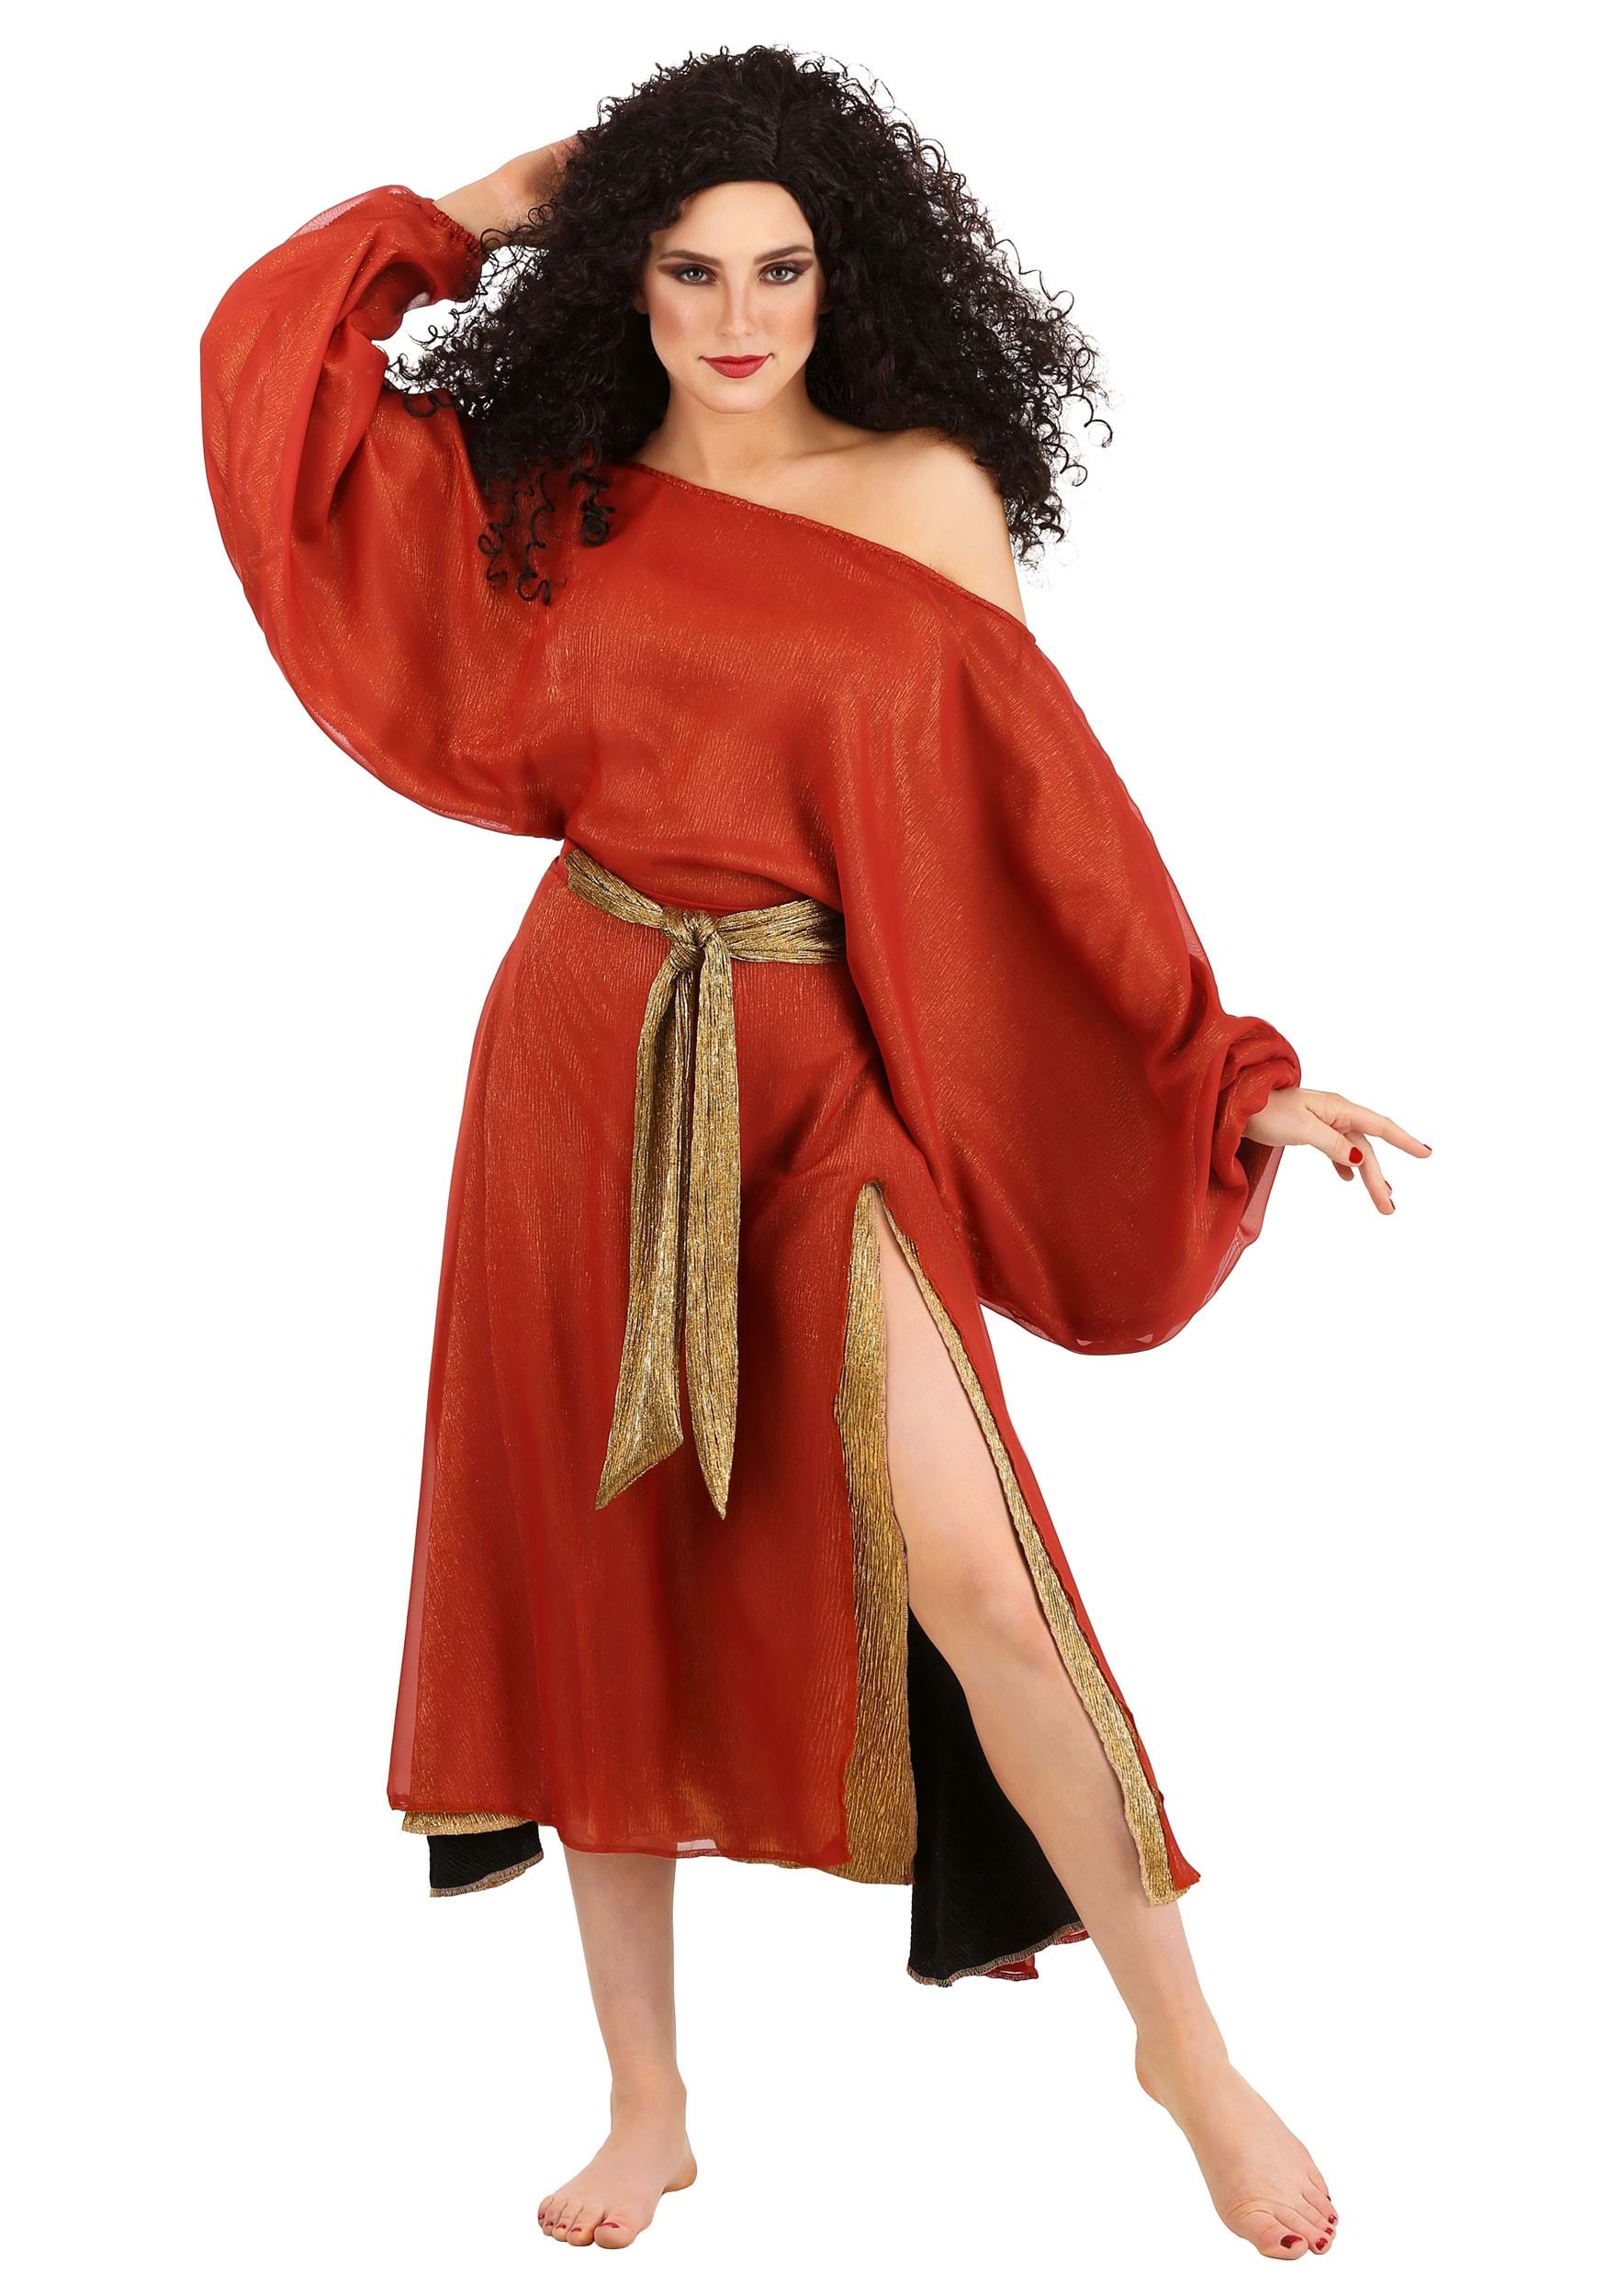 Photos - Fancy Dress Ghostbusters FUN Costumes  Zuul Women's Costume Brown/Orange 